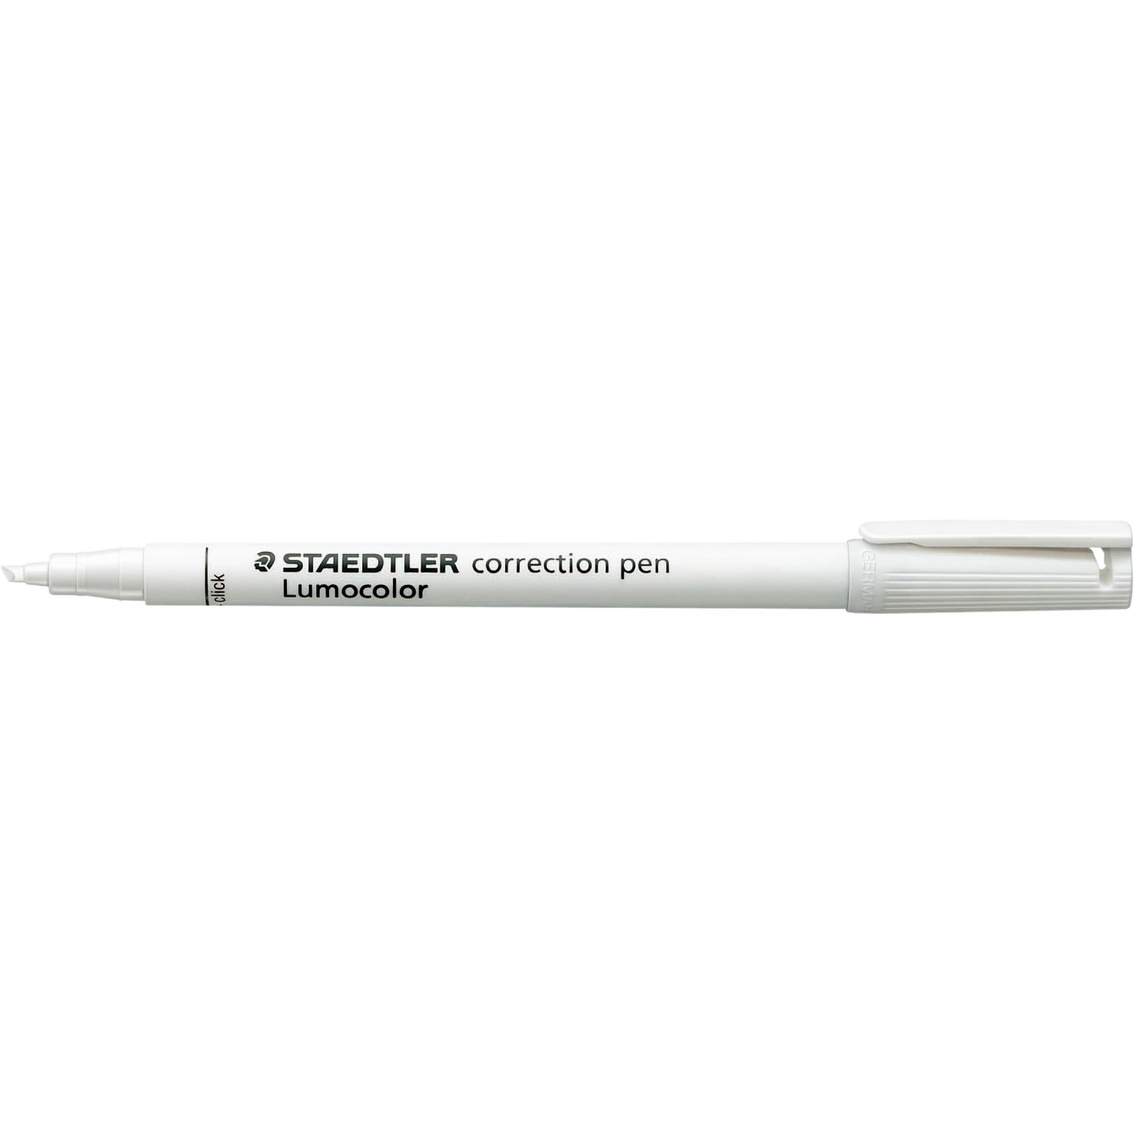 Staedtler Lumocolor Correction Pen - Image 2 of 2